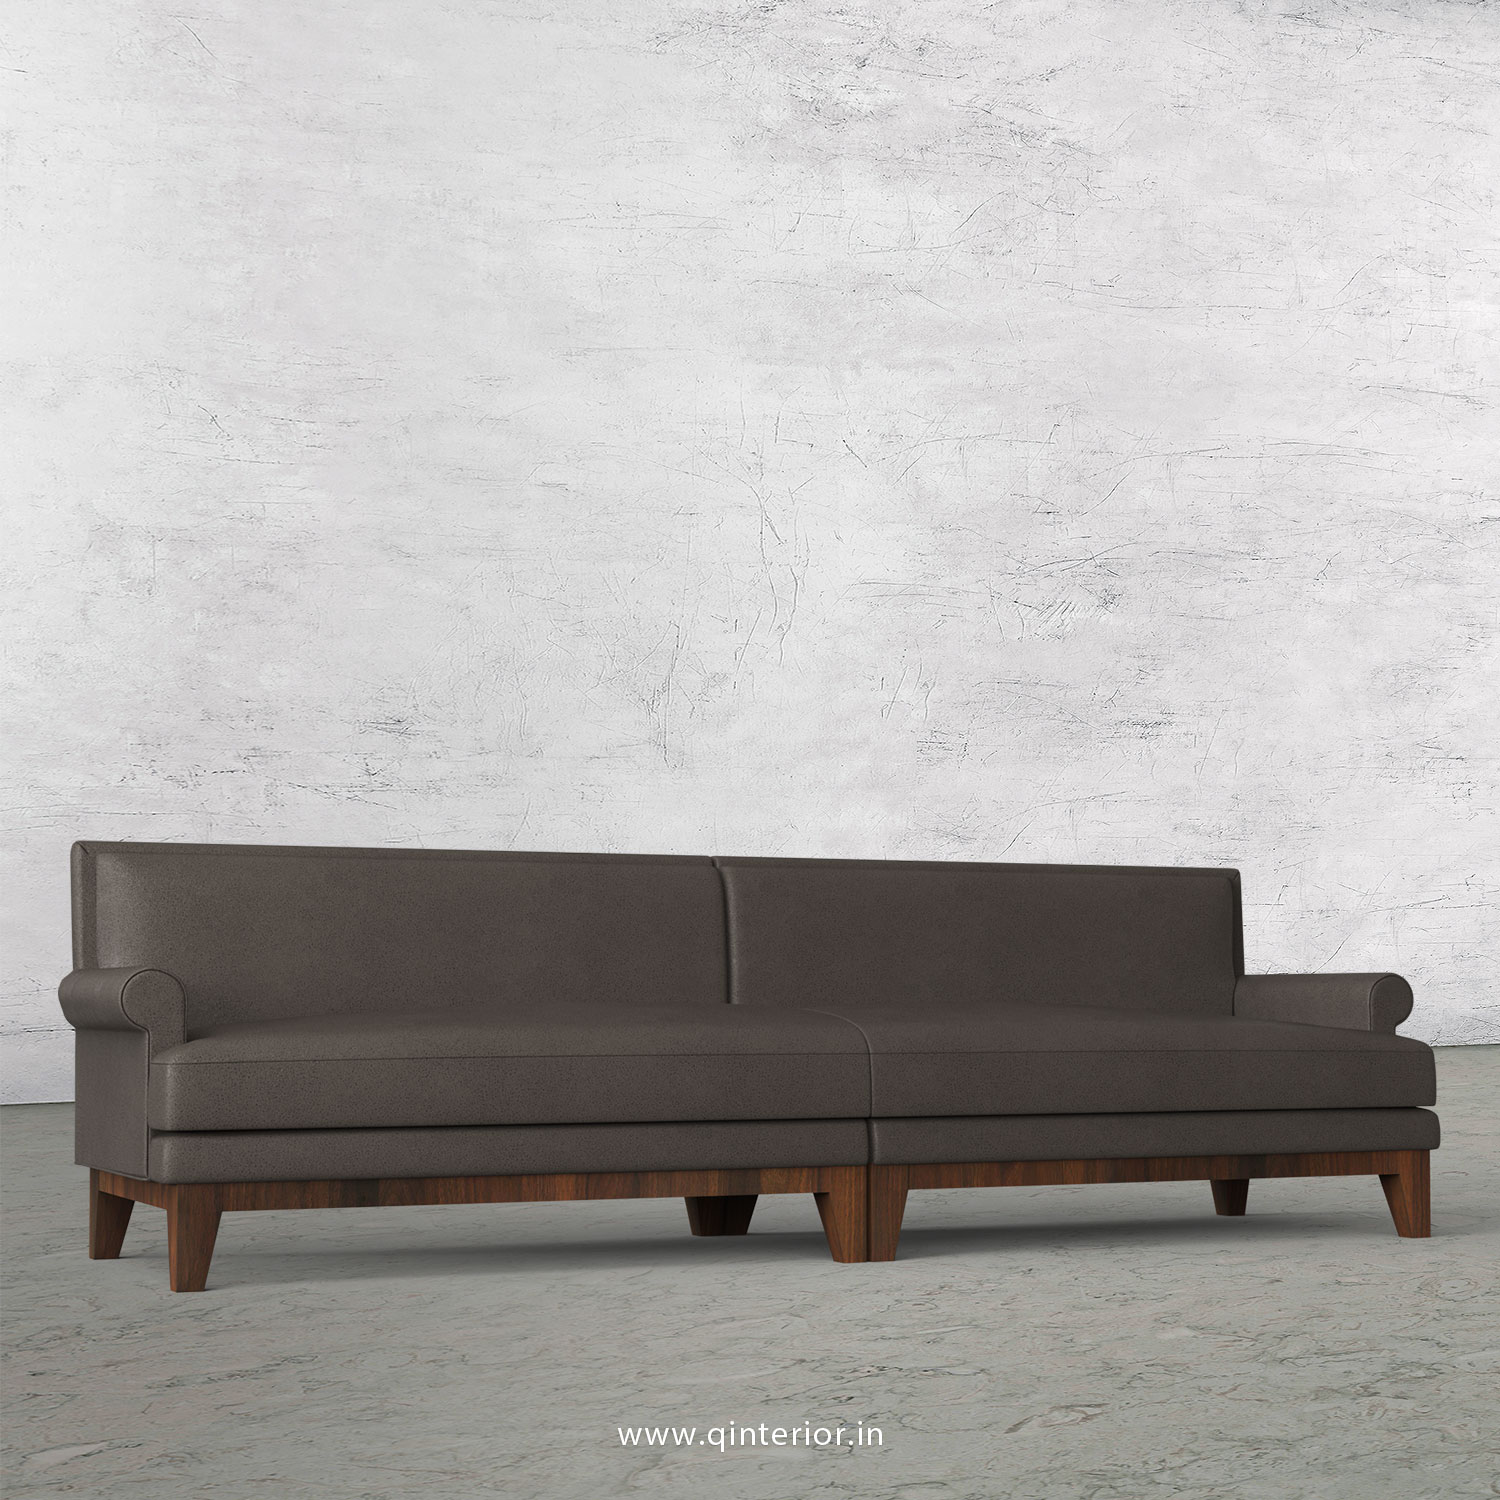 Aviana 4 Seater Sofa in Fab Leather Fabric - SFA001 FL15